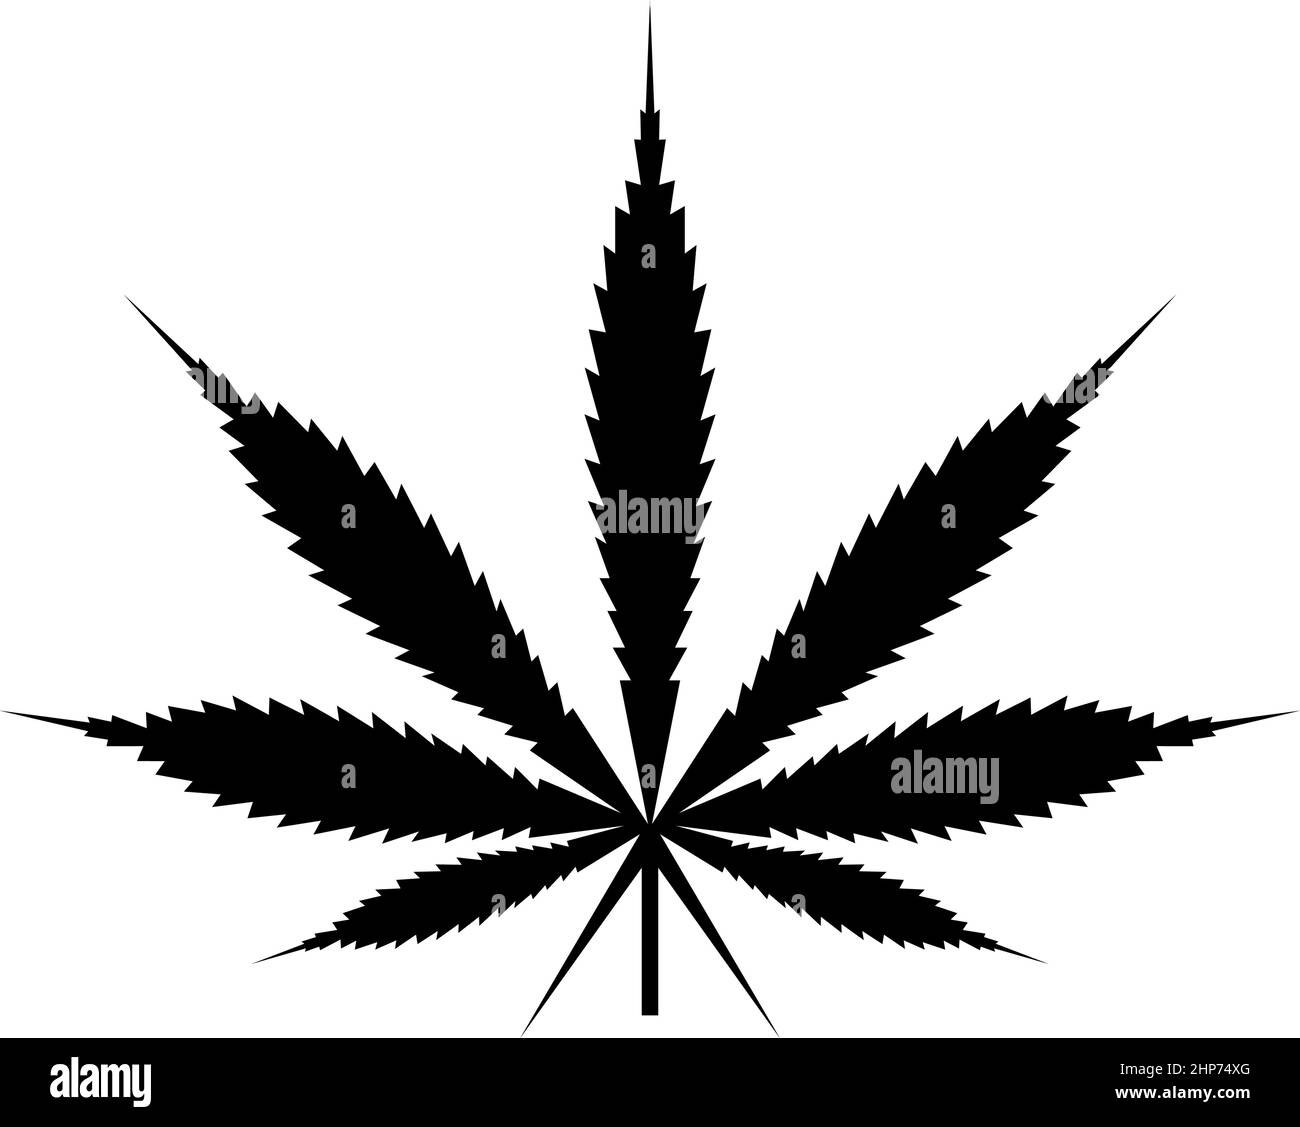 Blatt Cannabis Marihuana Hanf Symbol schwarze Farbe Vektor Illustration flachen Stil Bild Stock Vektor